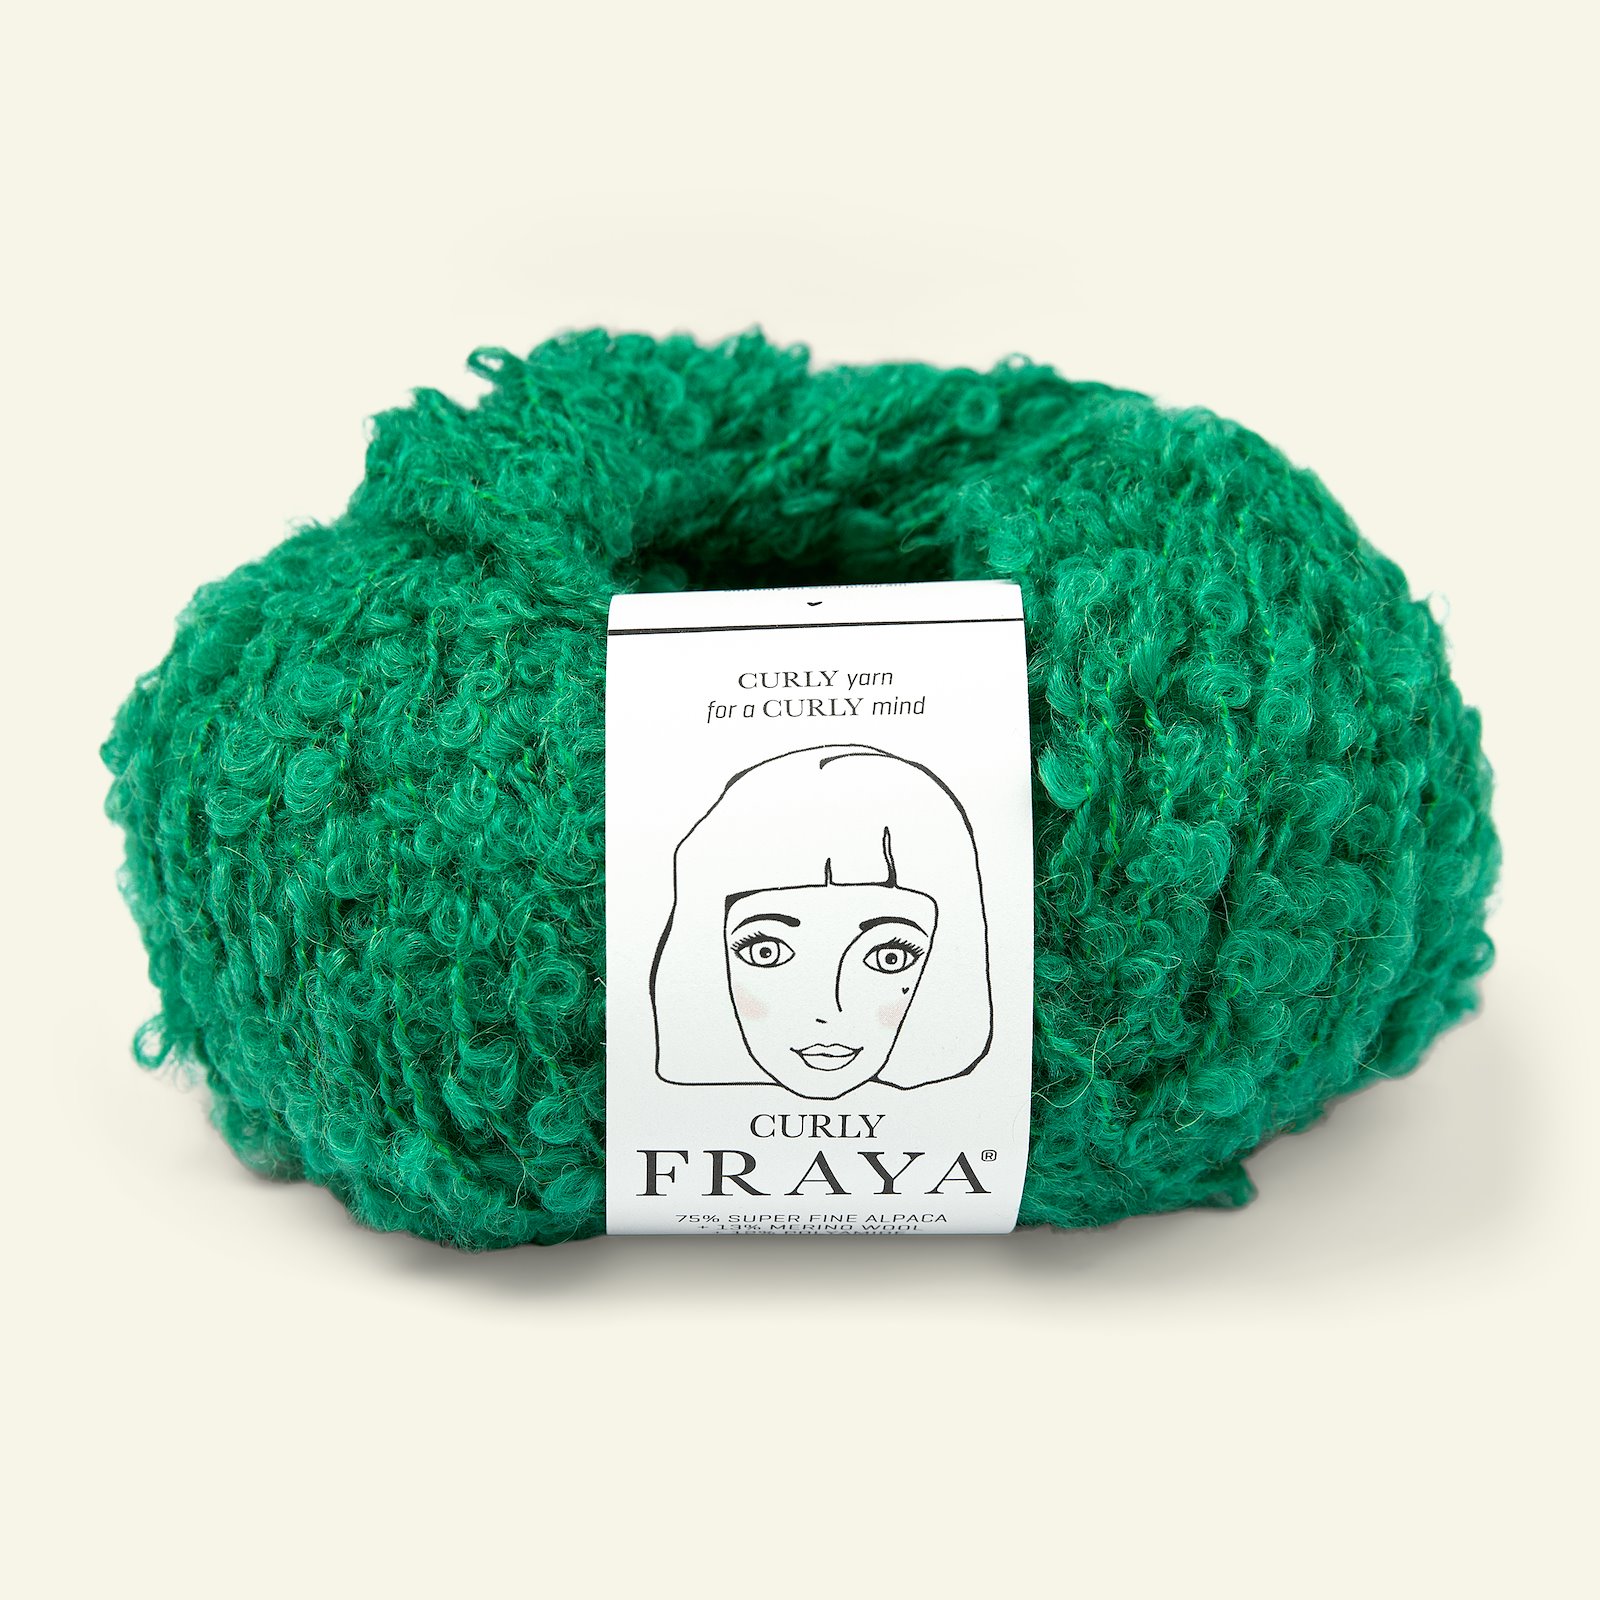 FRAYA, textured wool yarn "Curly", bright green 90000171_pack